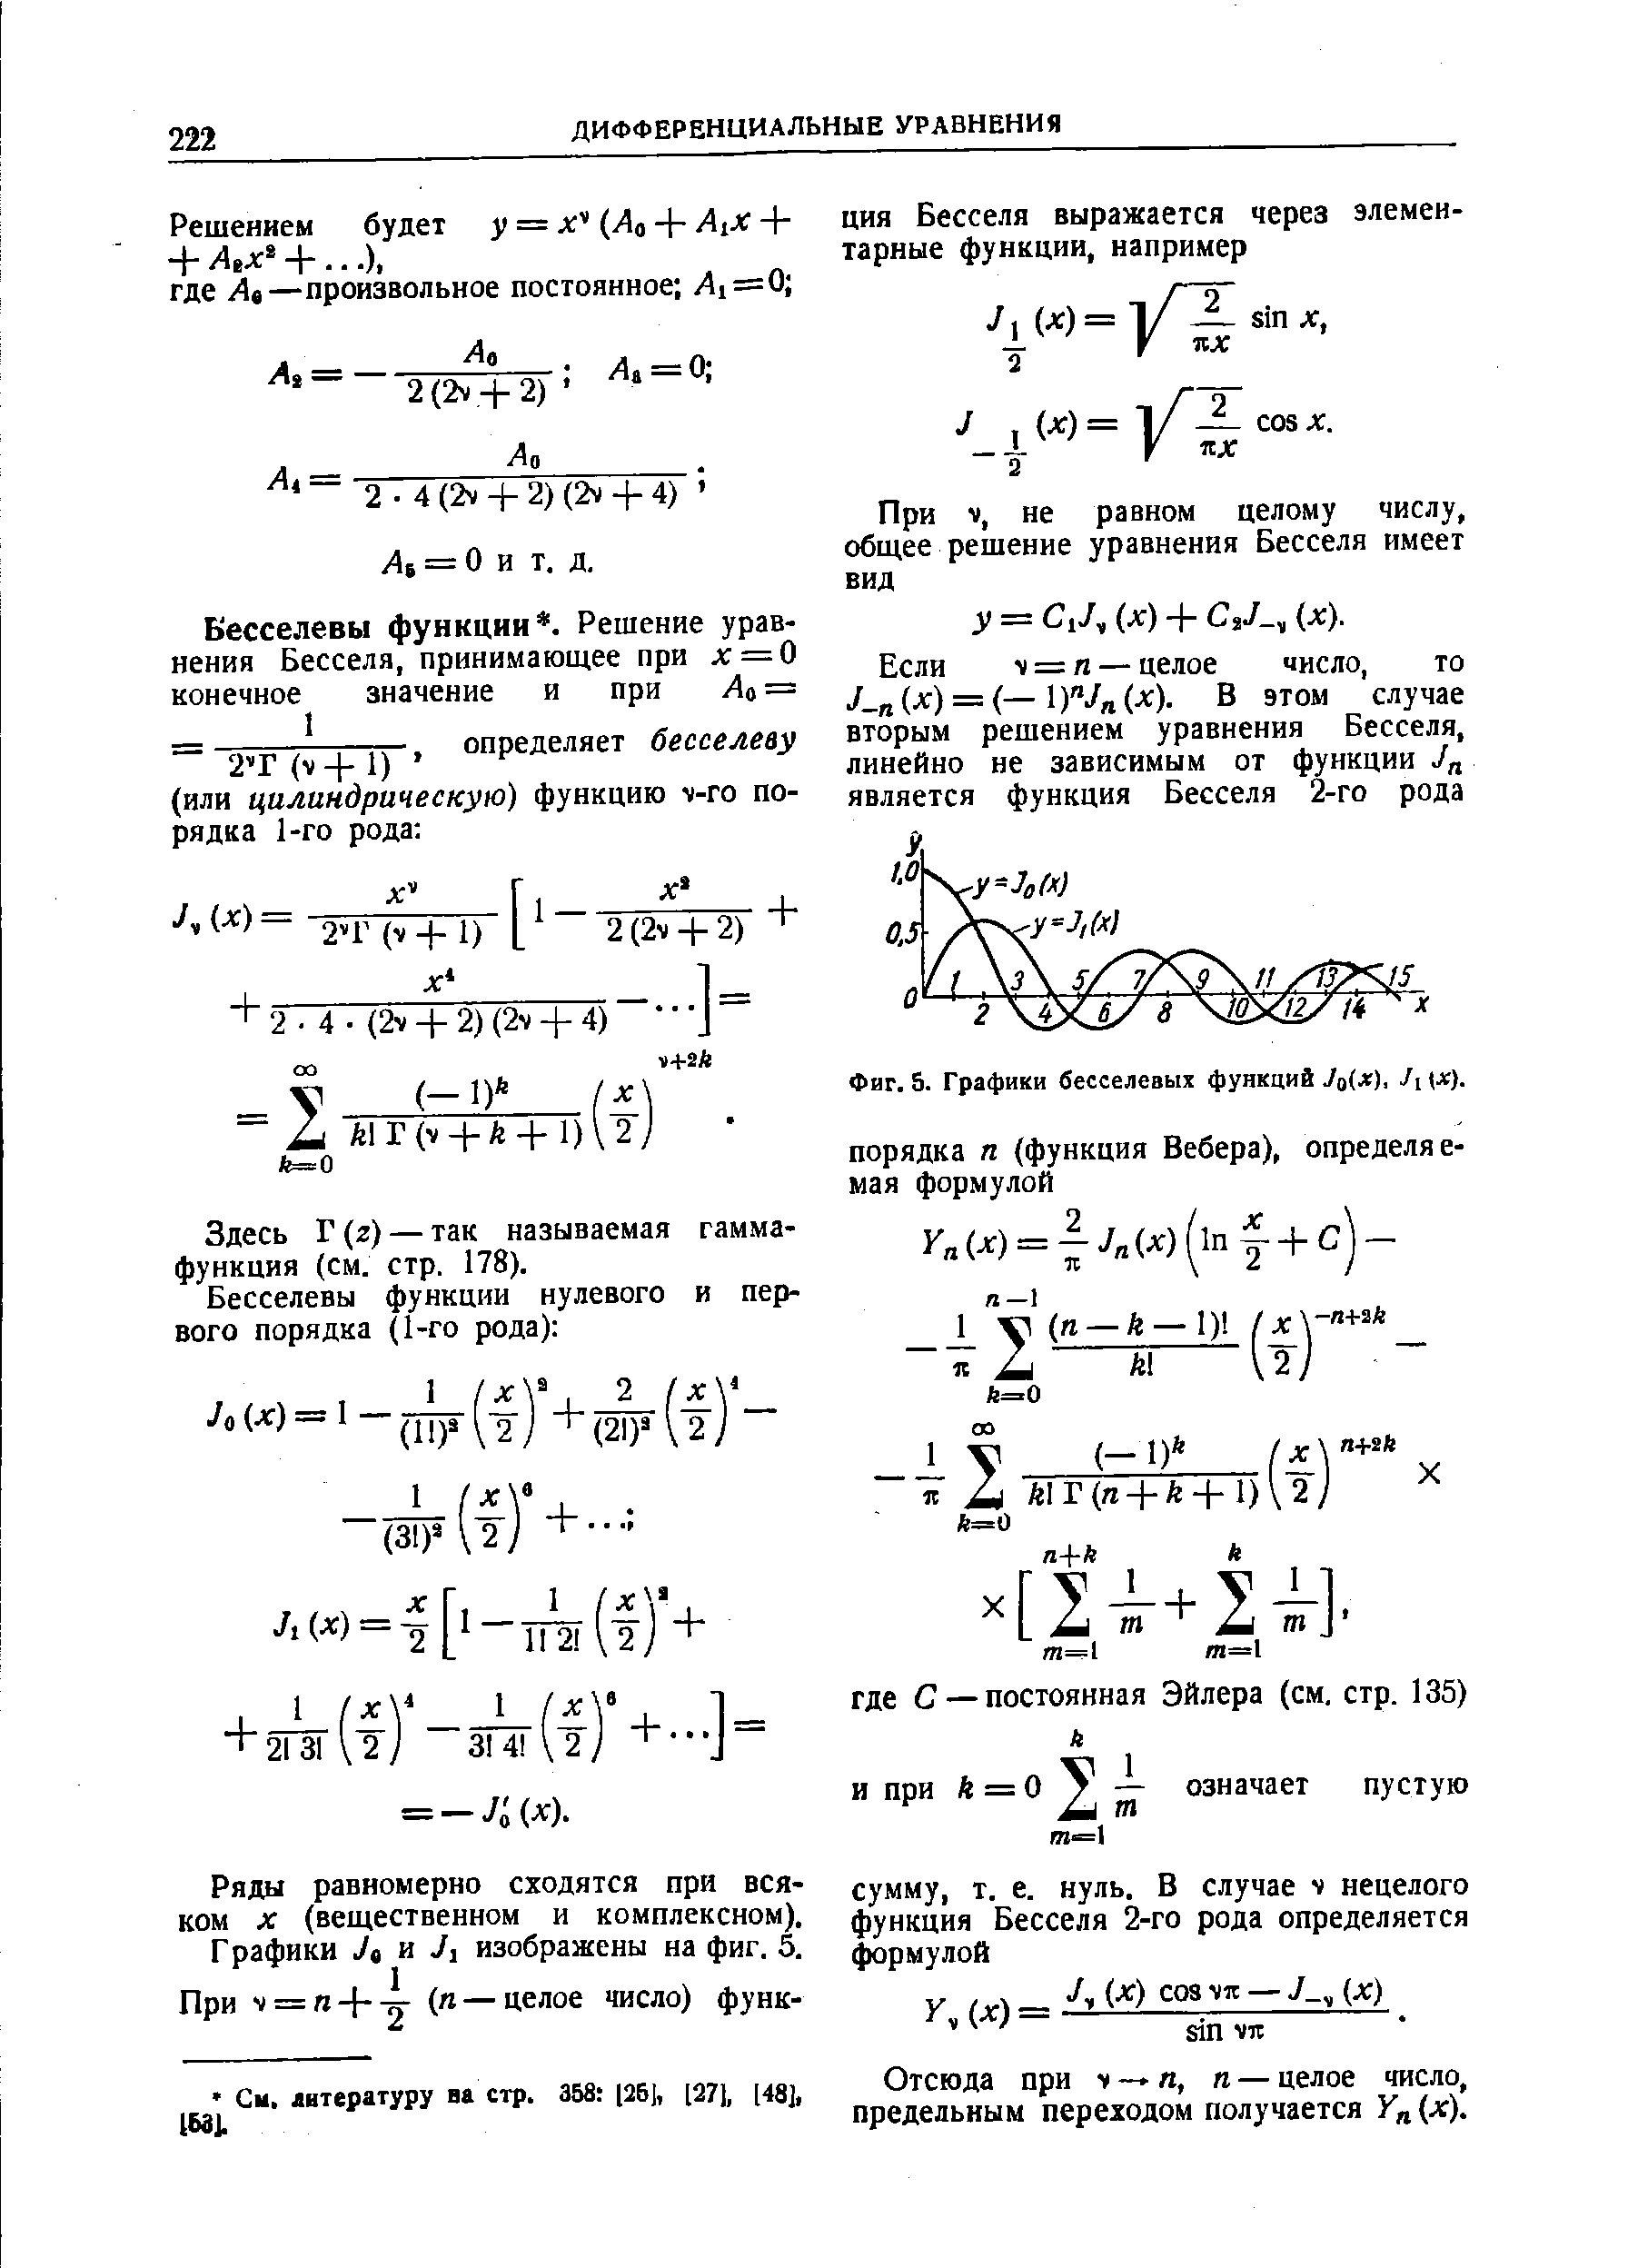 Фиг. 5. Графики бесселевых функций Jo x), J [х).
